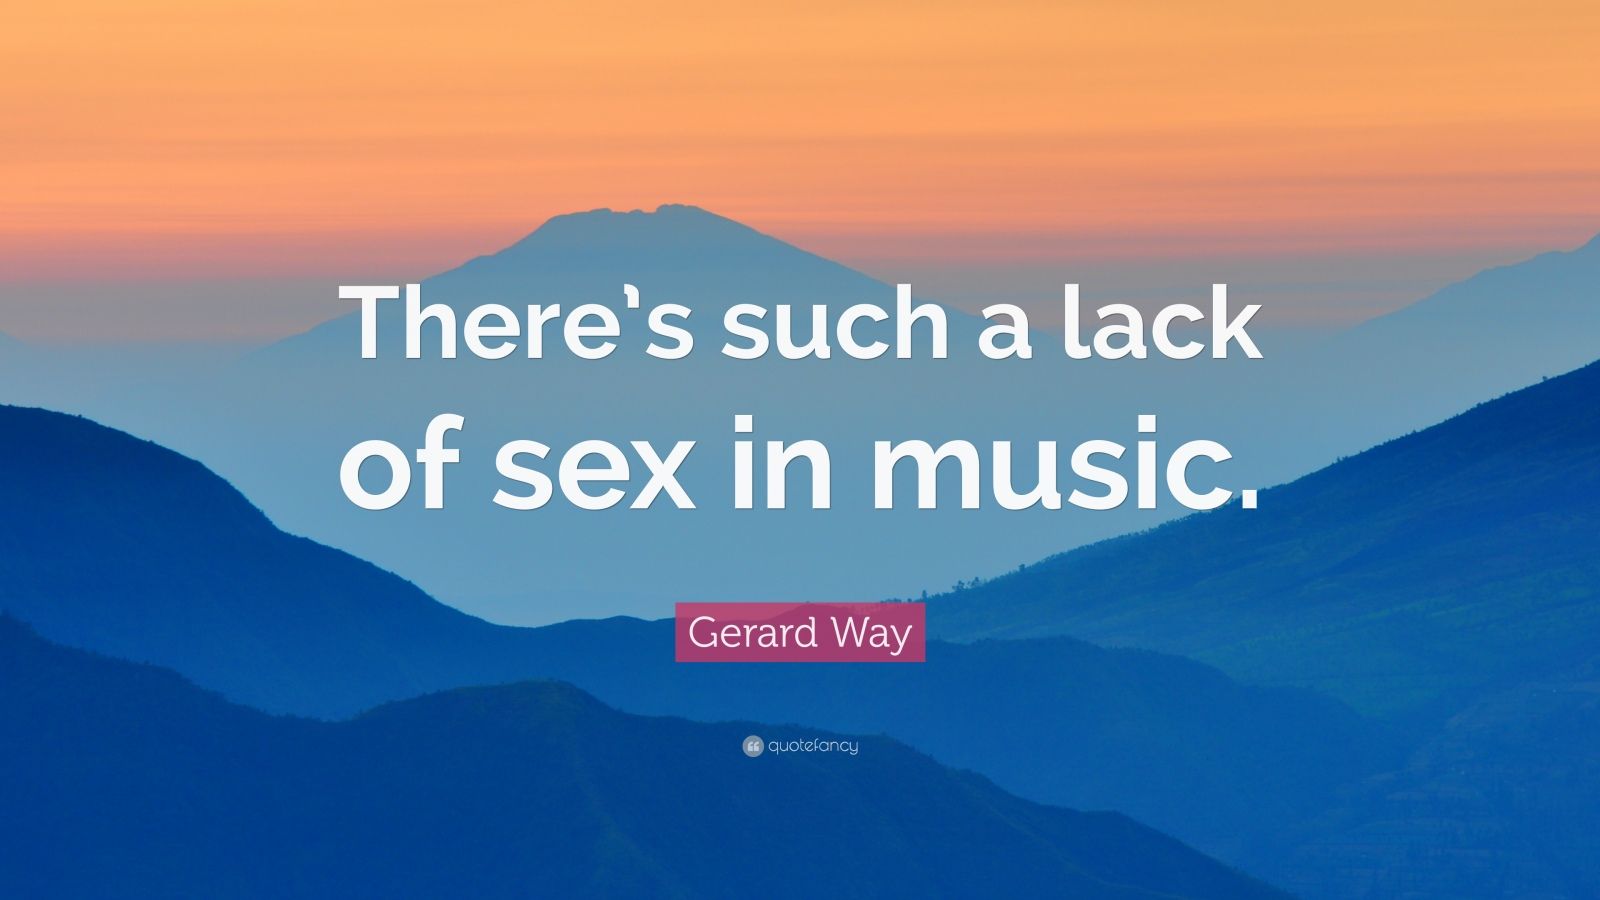 Gerard Way Quotes 100 Wallpapers Quotefancy